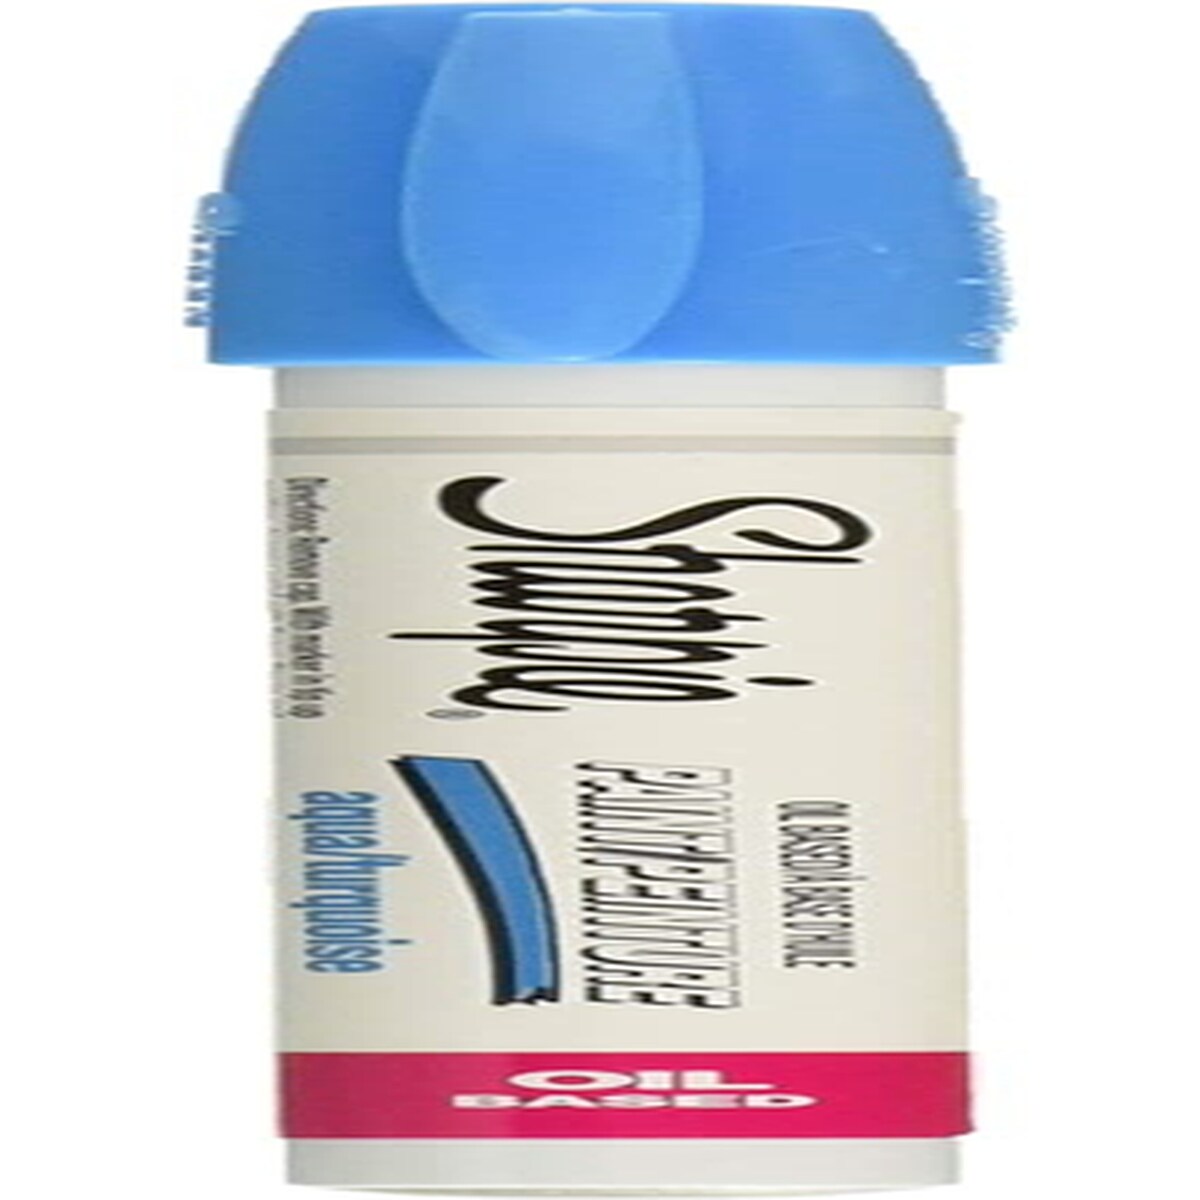 Sharpie® Oil-Based Paint Markers, Medium Point Metallic Set, Michaels